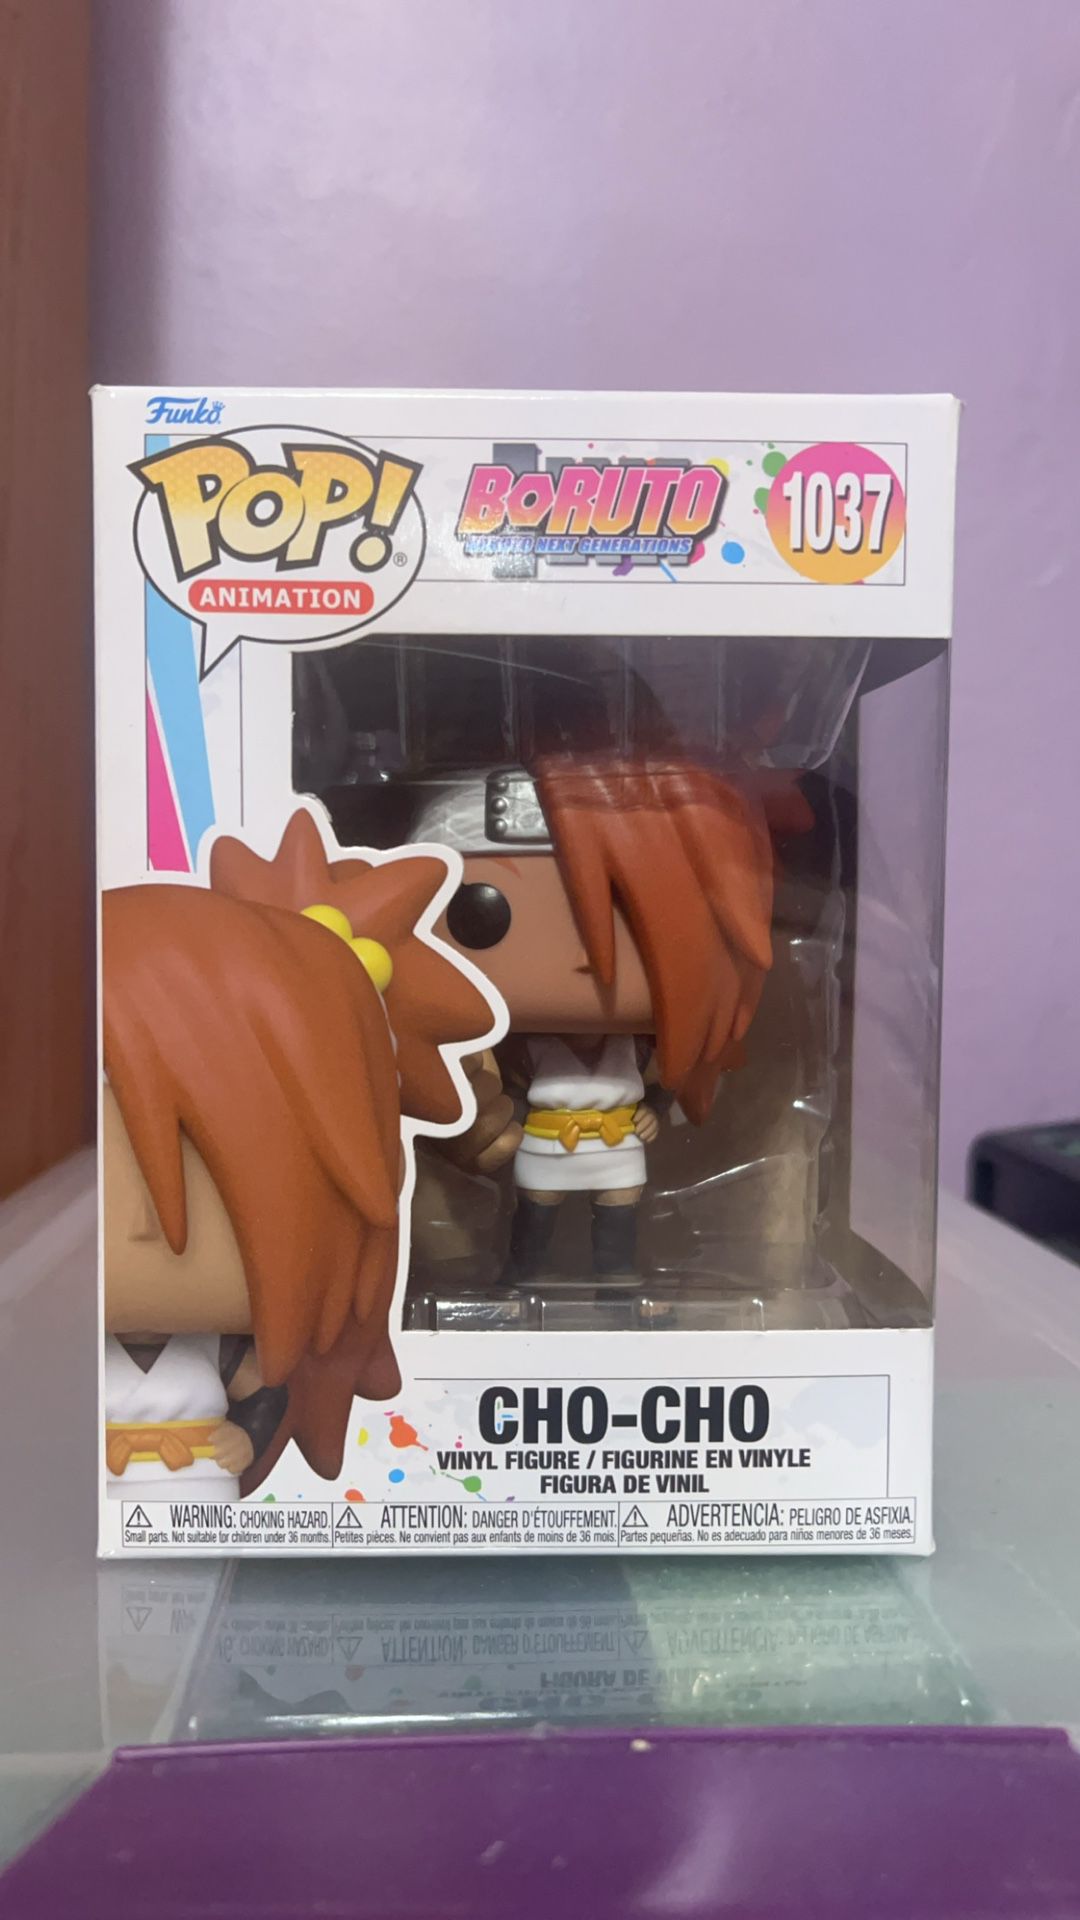 NEW IN BOX! UNOPENED Cho-Cho Naruto Boruto Anime Funko Pop Figure Vinyl Figurine